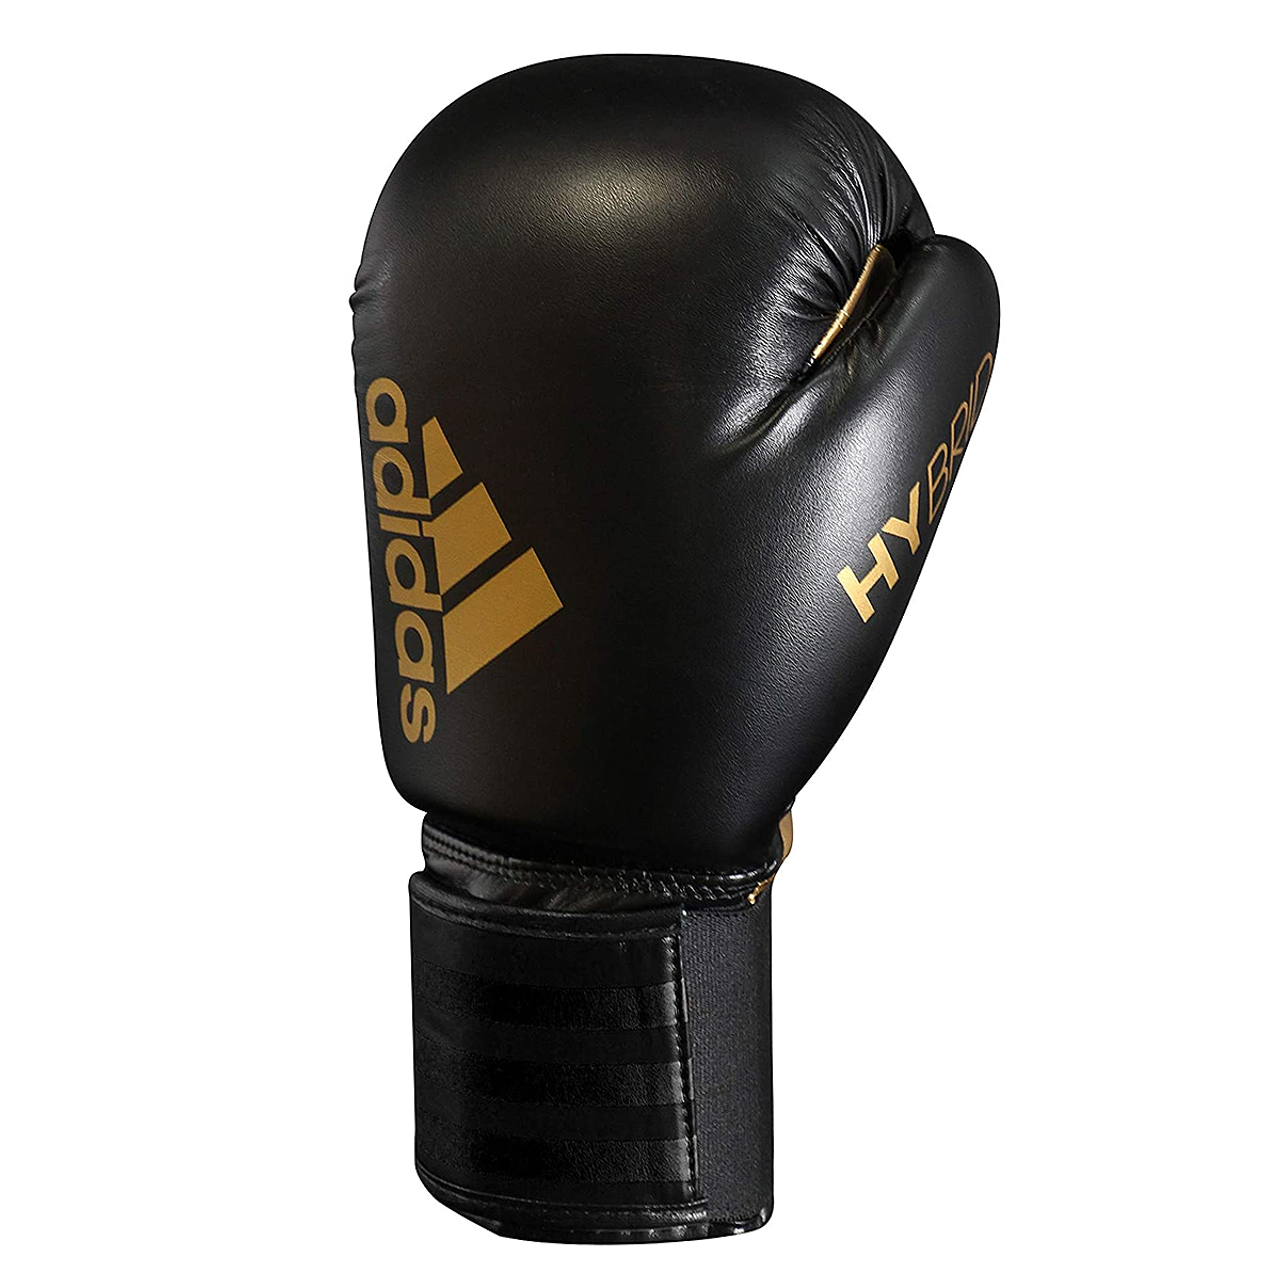 Adidas Hybrid 50 Boxing Gloves Black, Gold 